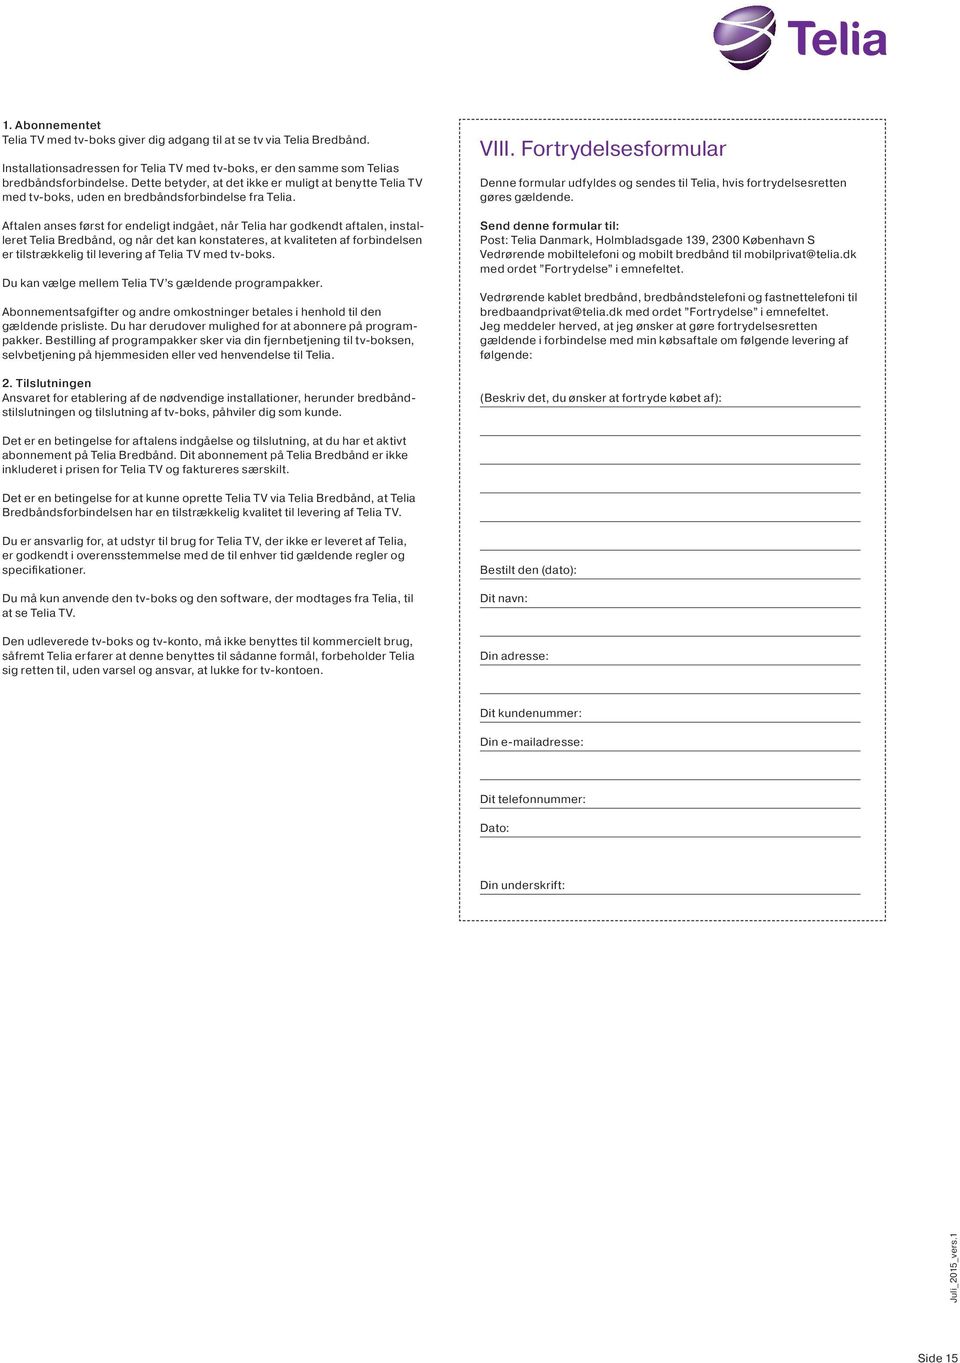 Vilkår for privatkunder i Telia - PDF Free Download